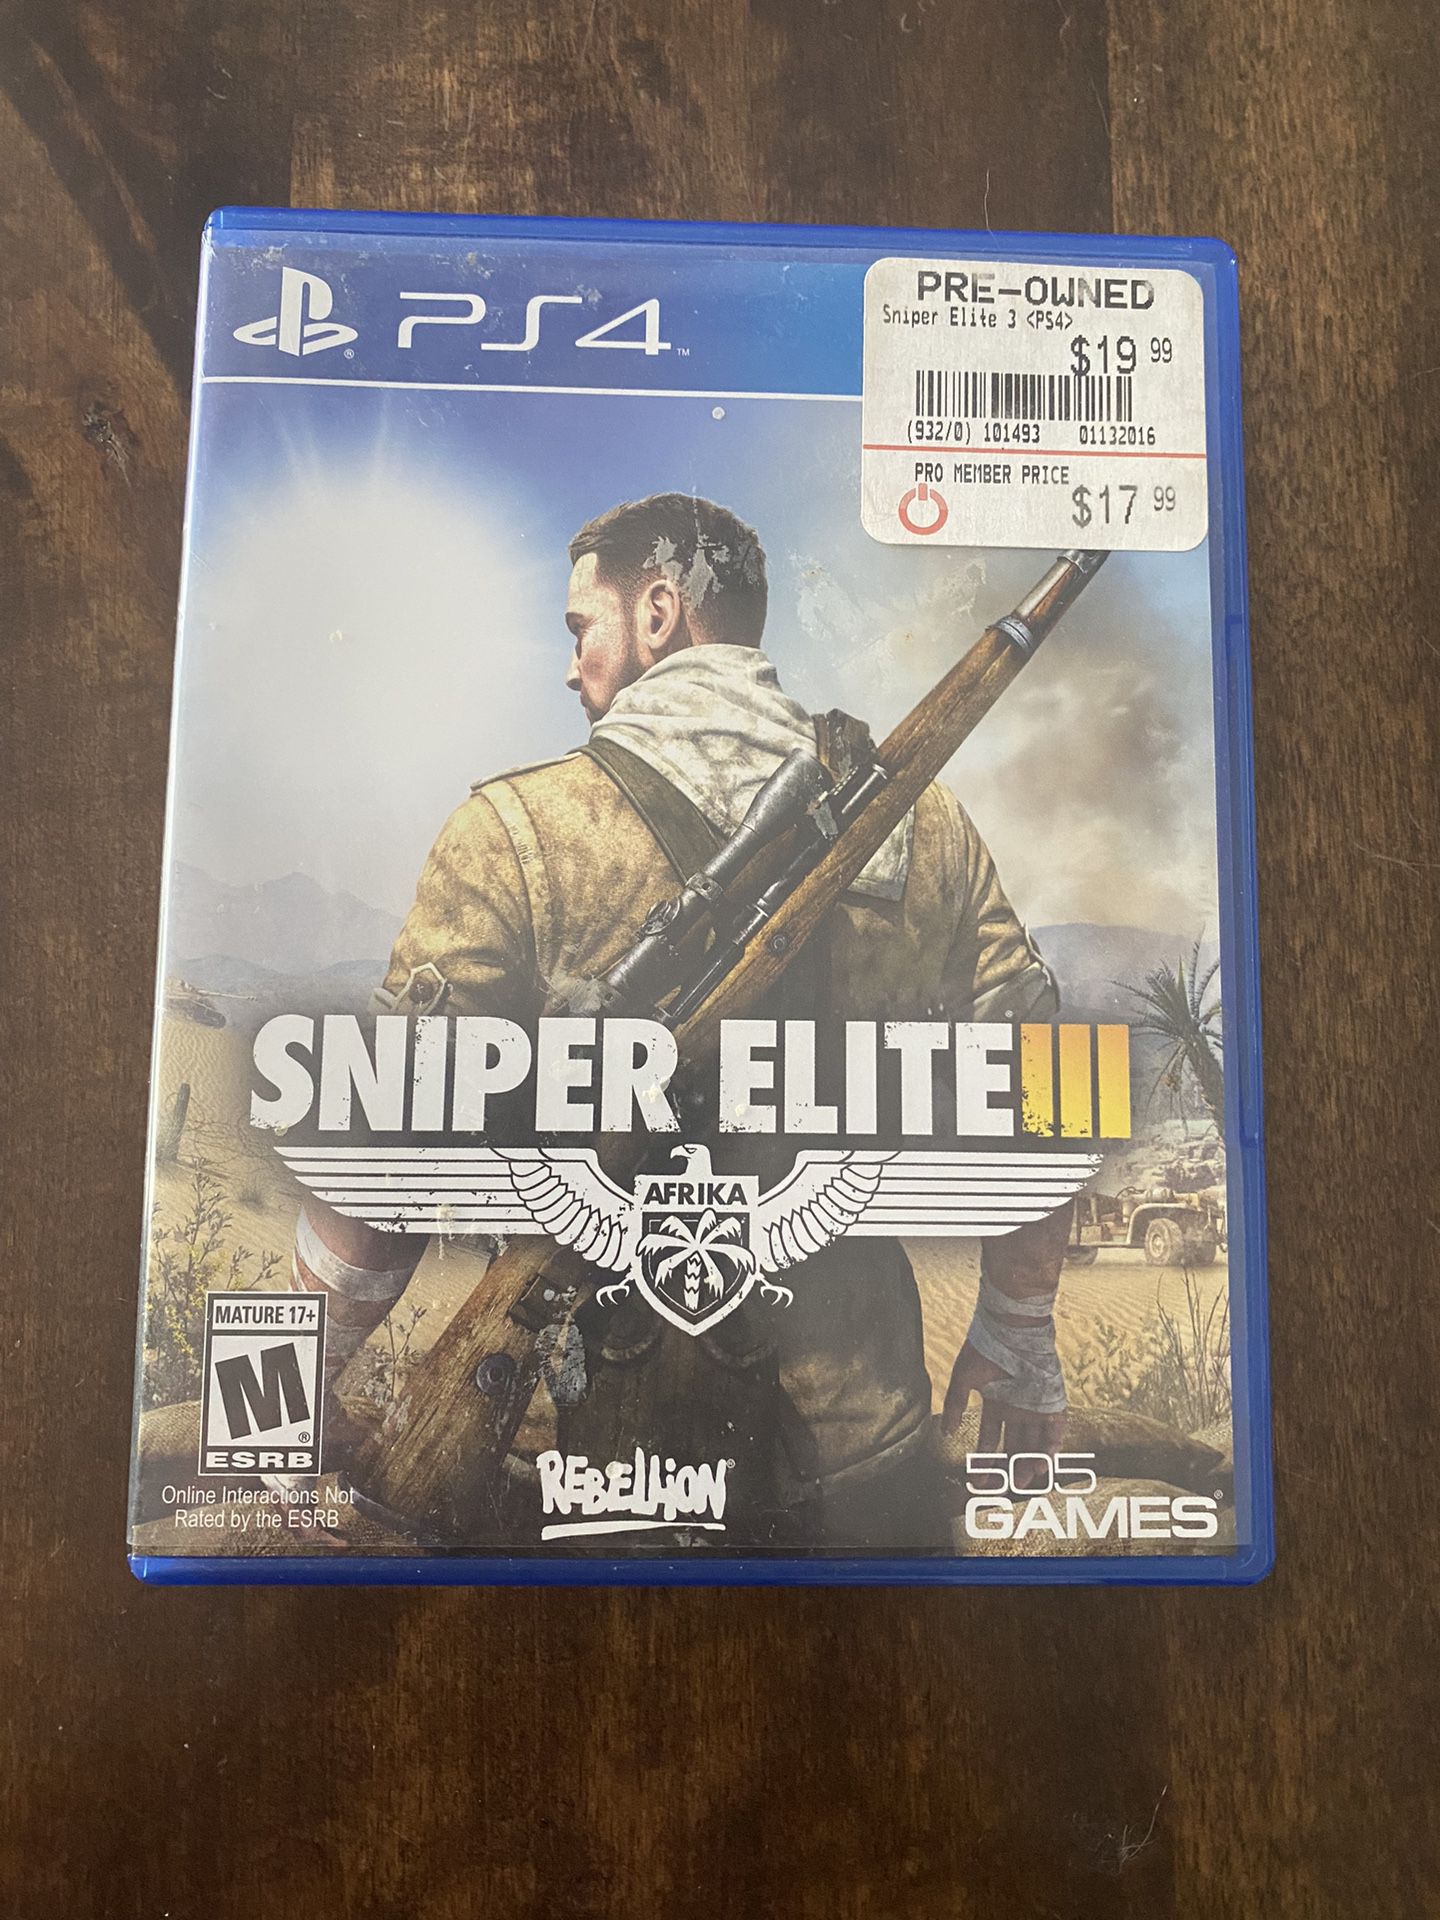 Sniper elite 3 - PS4